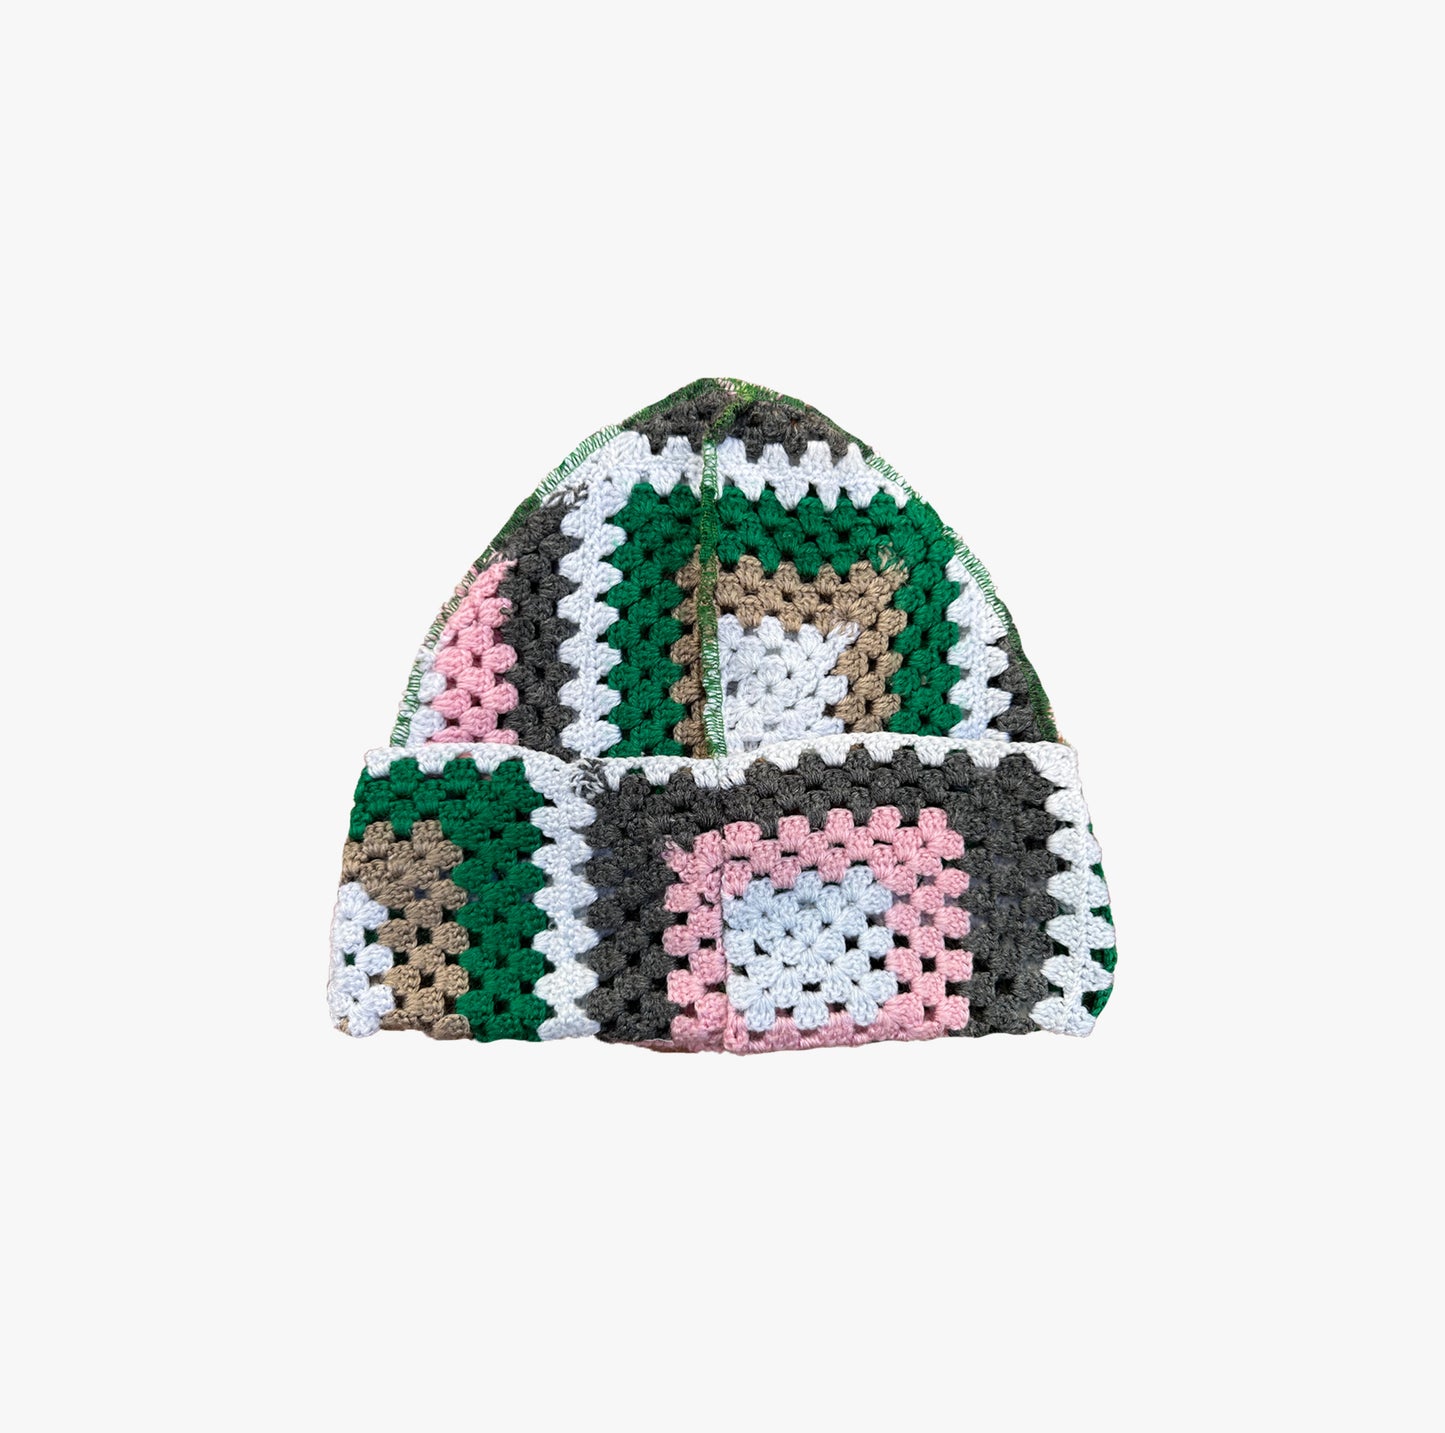 Handmade crochet overlocked beanie hat